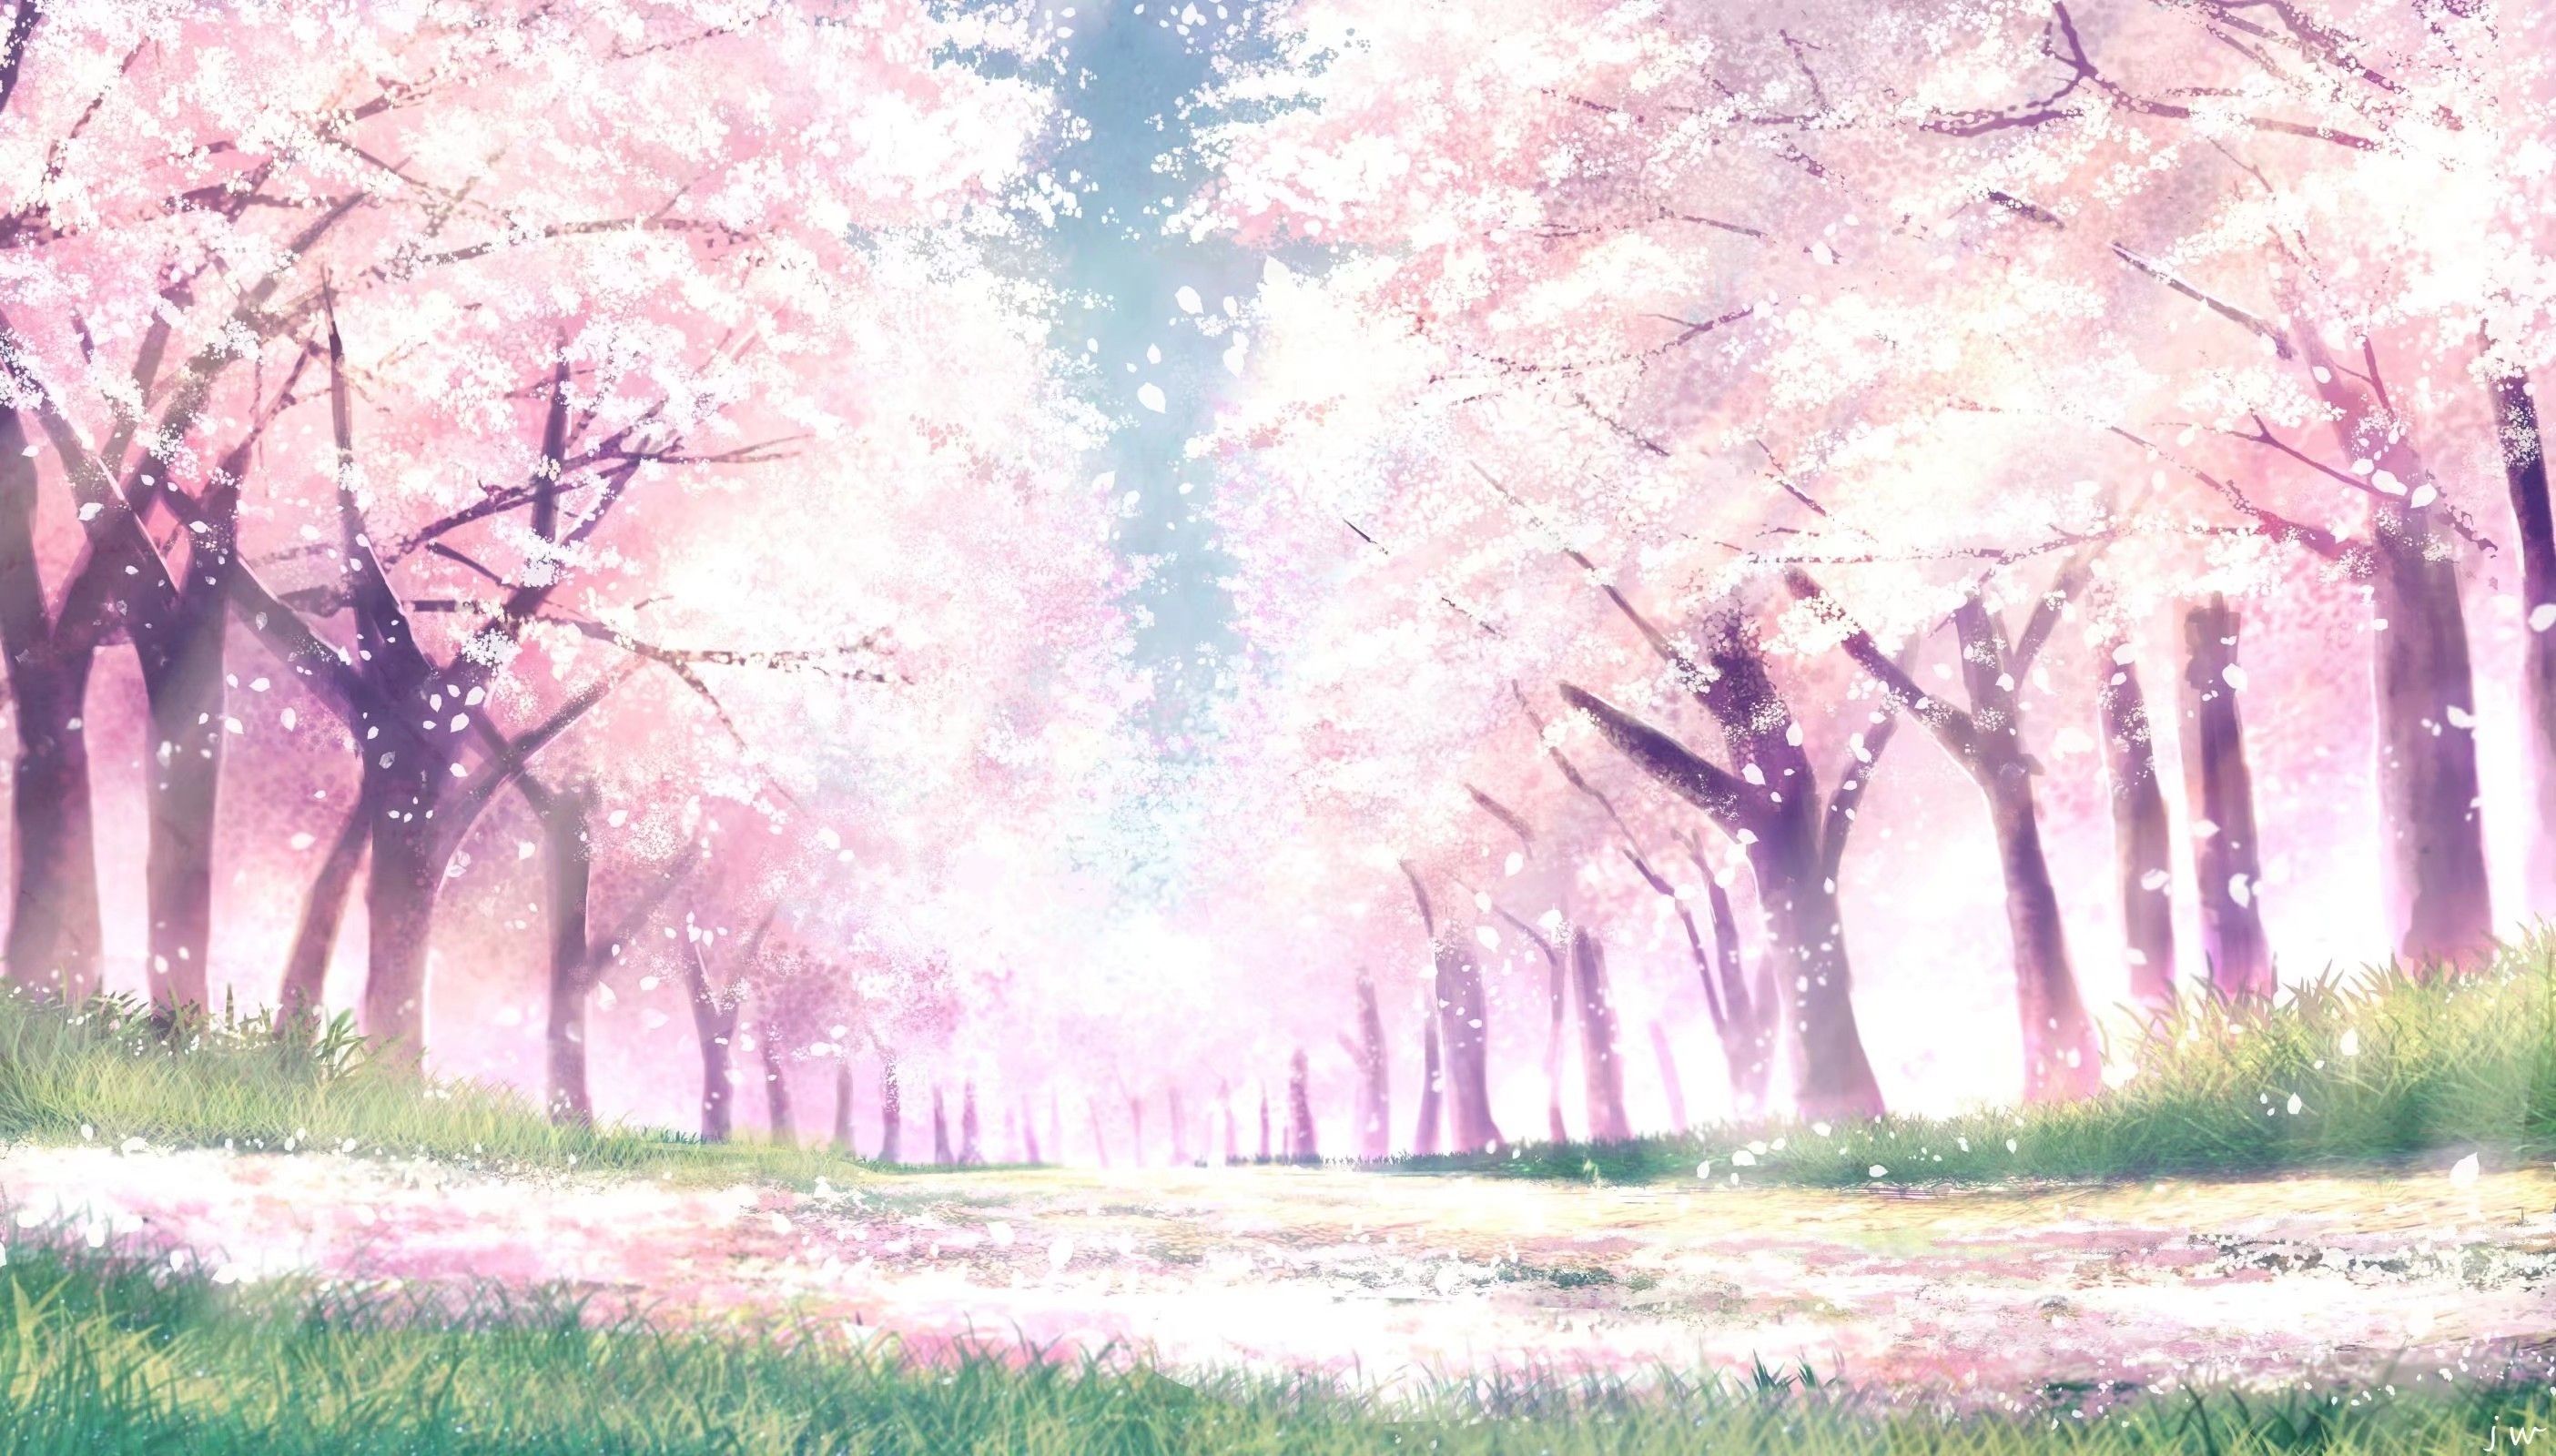 Anime Spring Scenery Wallpaper Free Anime Spring Scenery Background